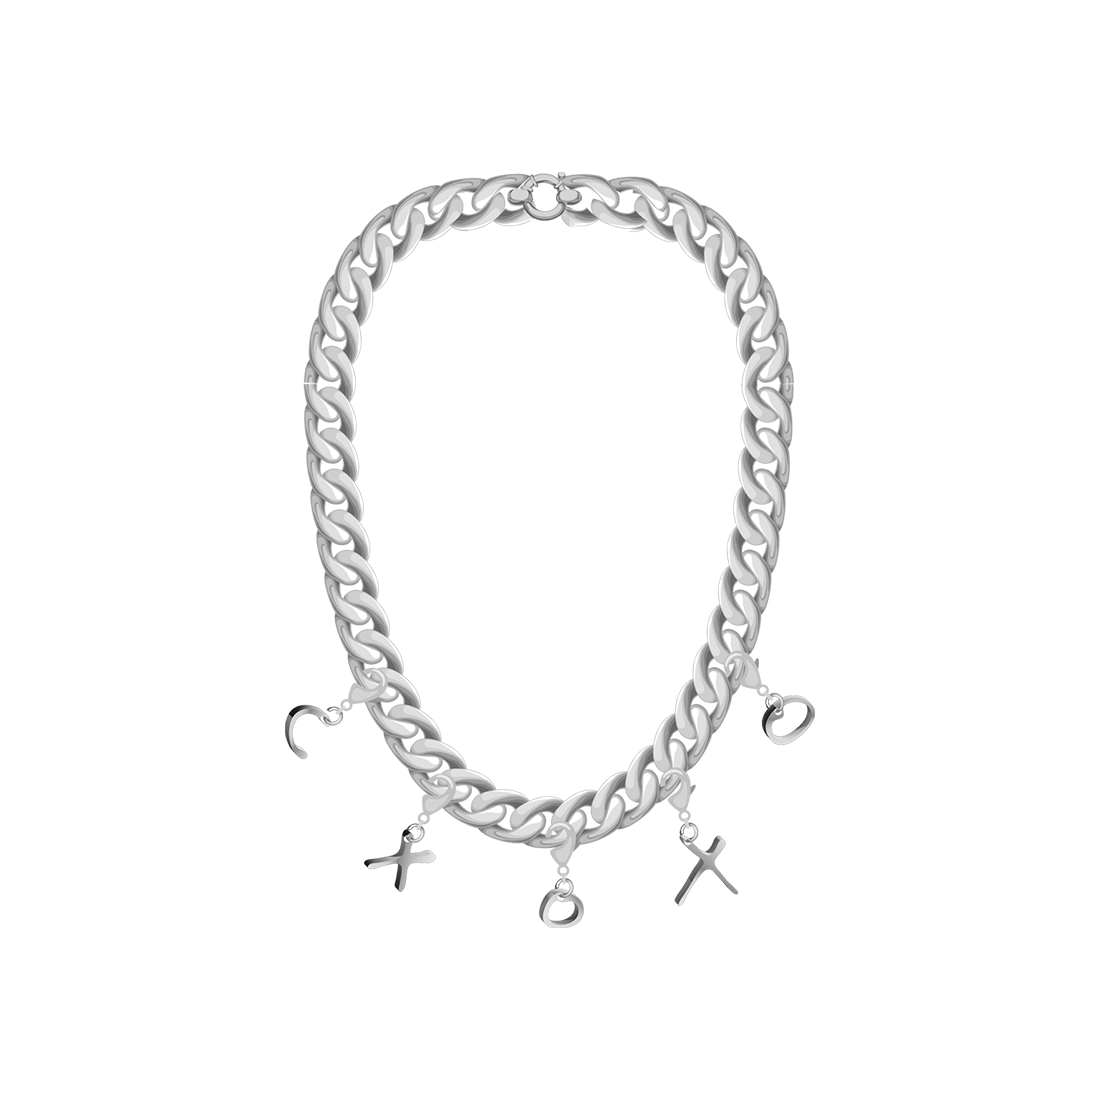 C,XOXO Customizable Necklace